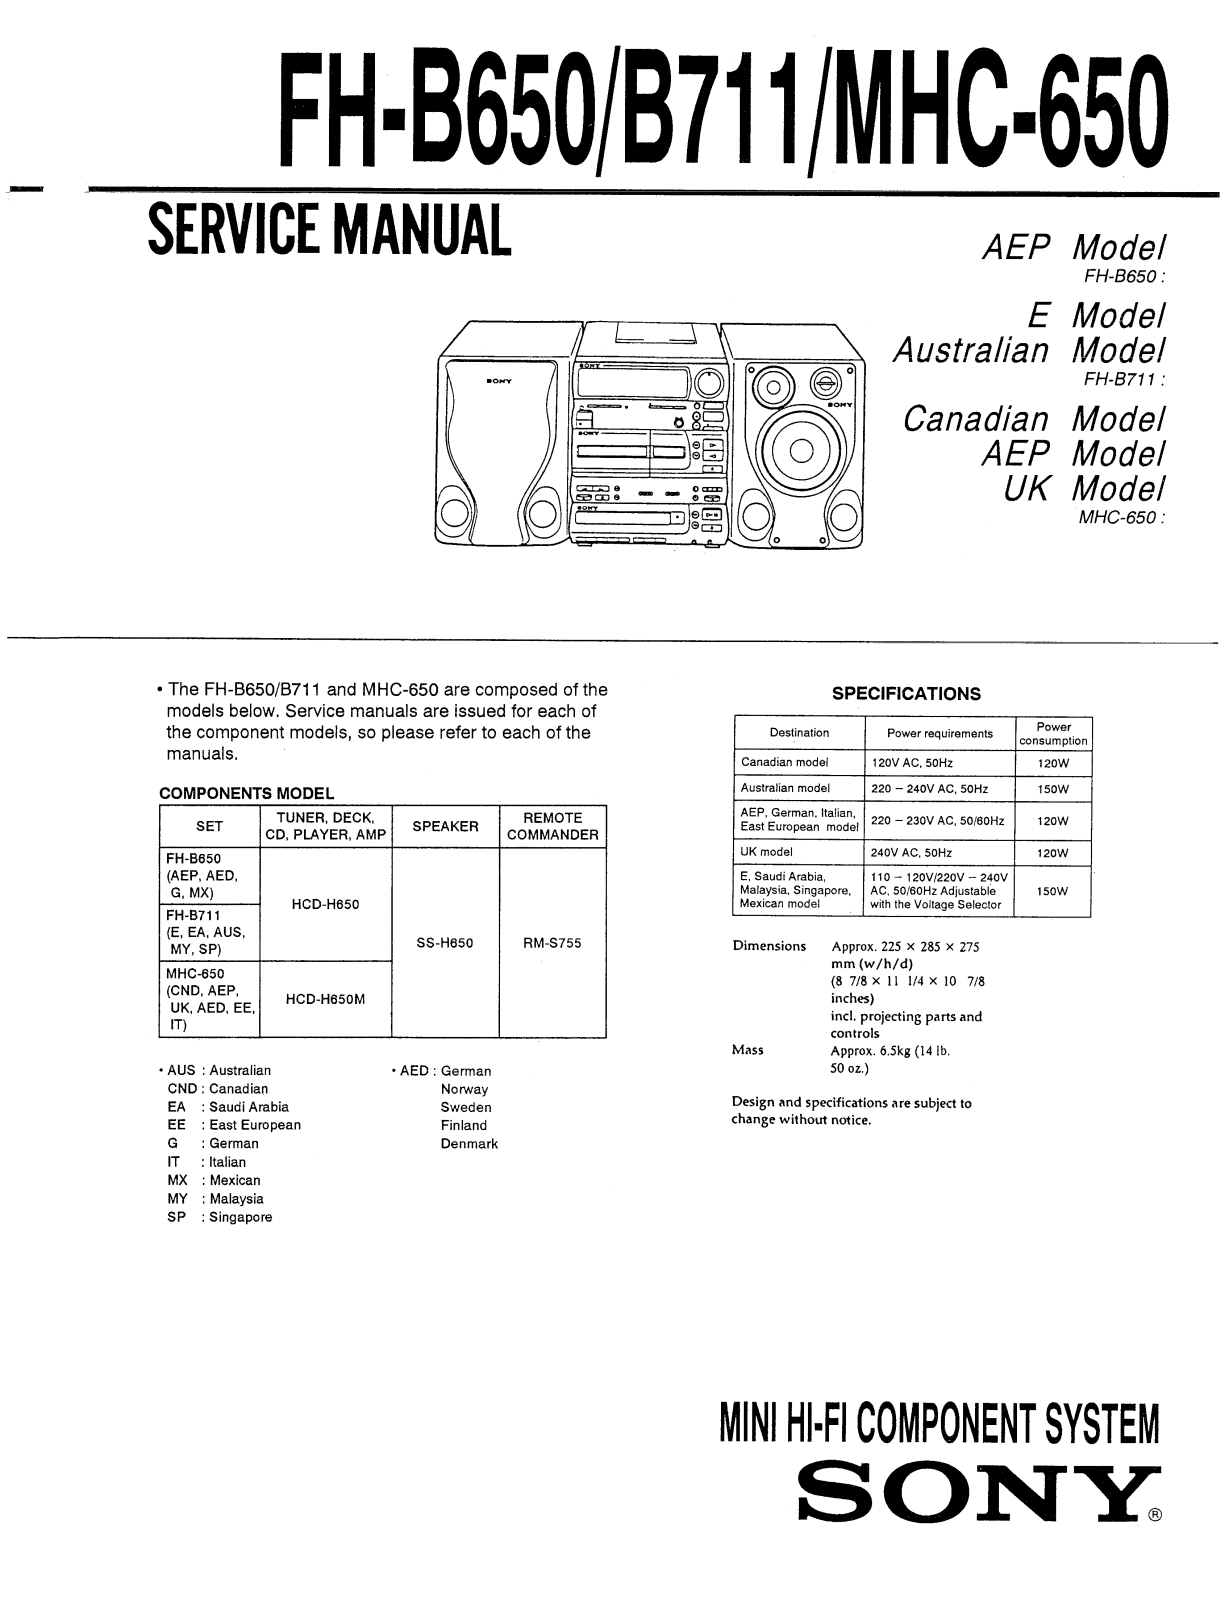 SONY FH-B650, FH-B711, MHC-650 SERVICE MANUAL